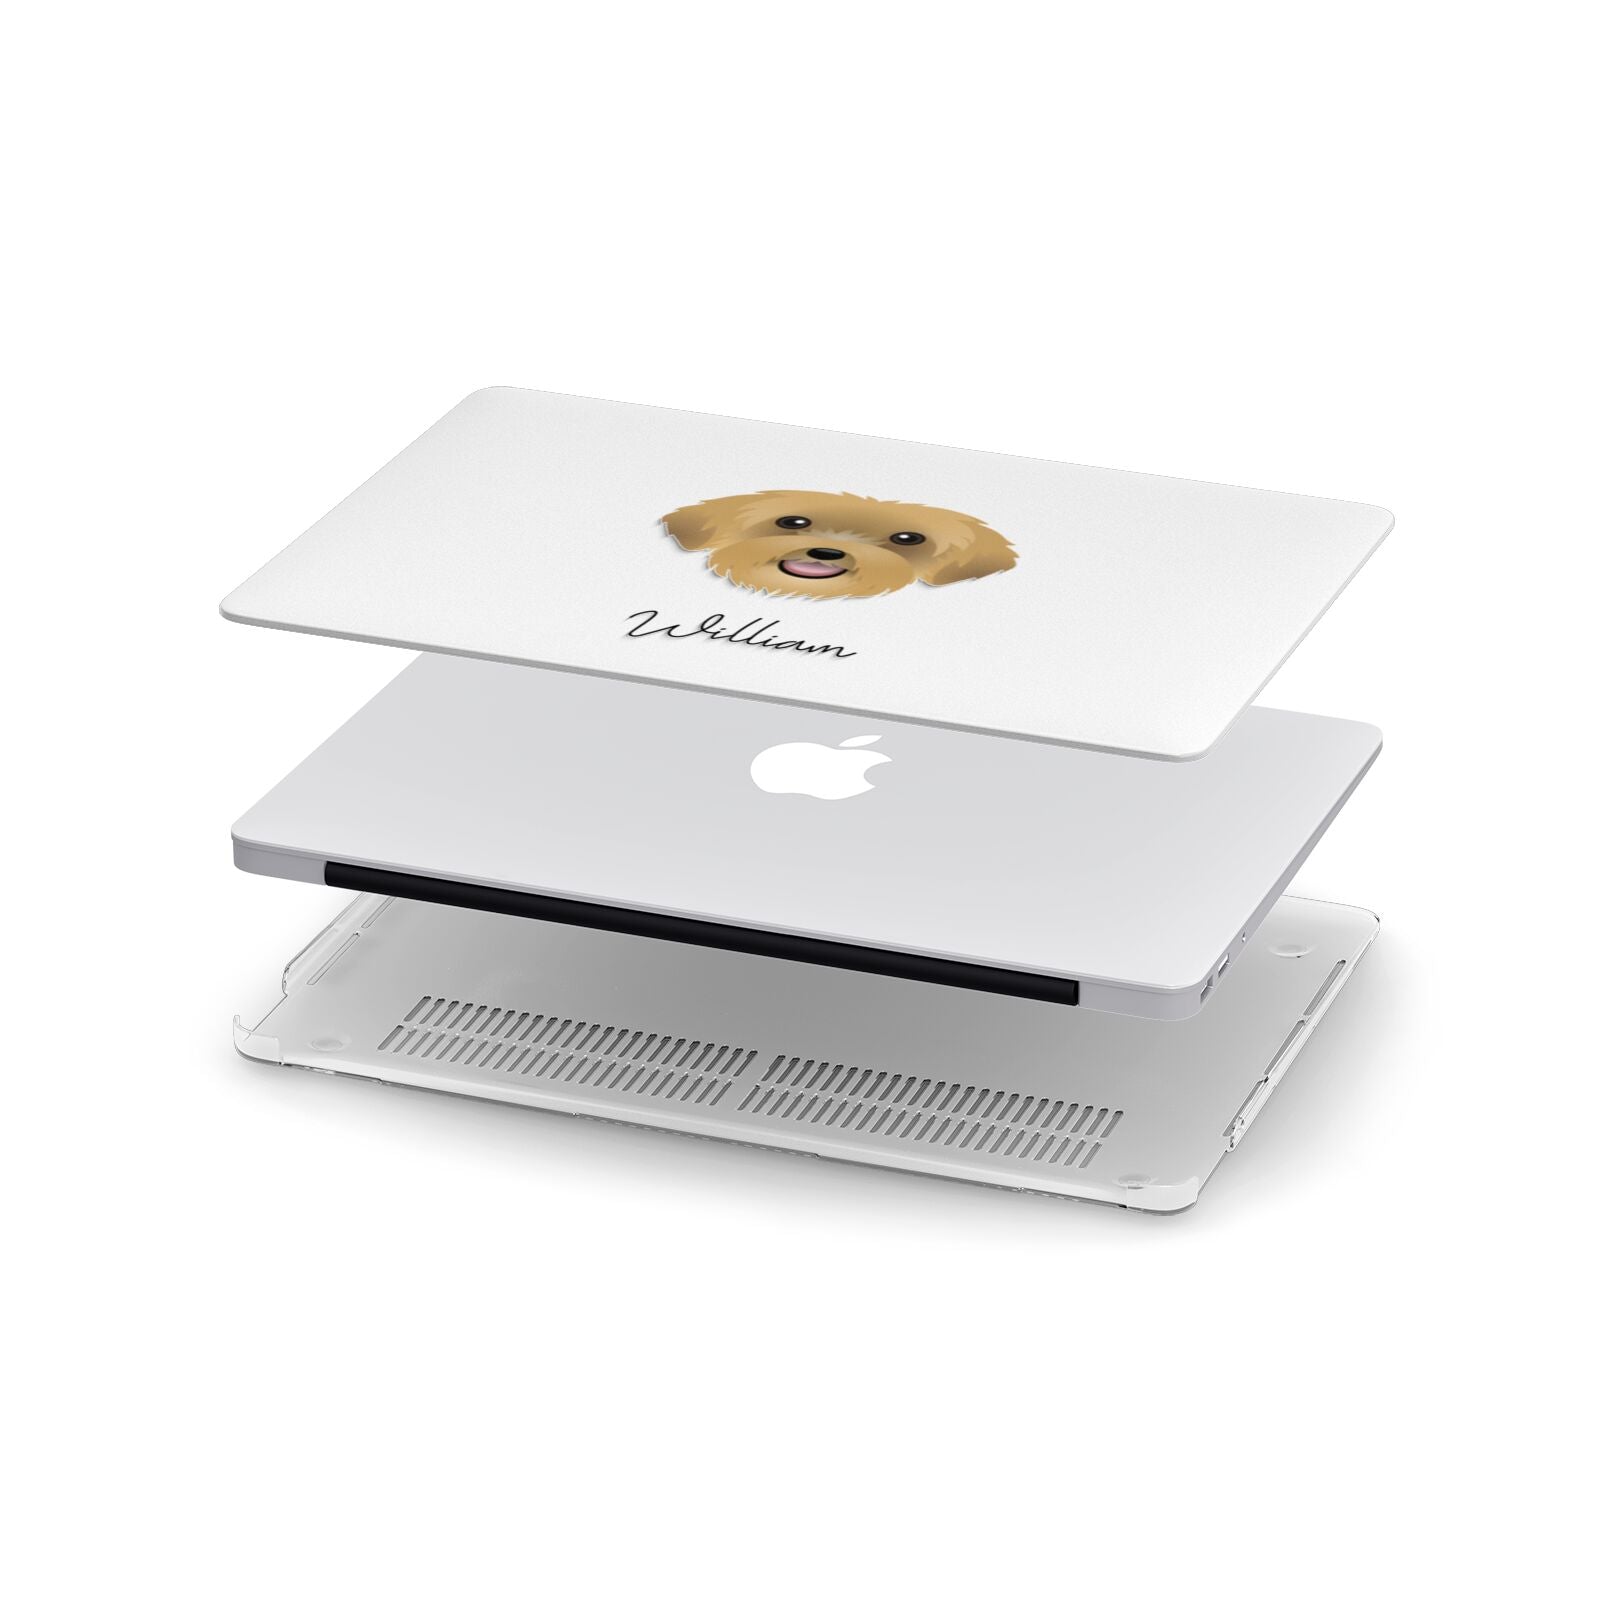 Schnoodle Personalised Apple MacBook Case in Detail